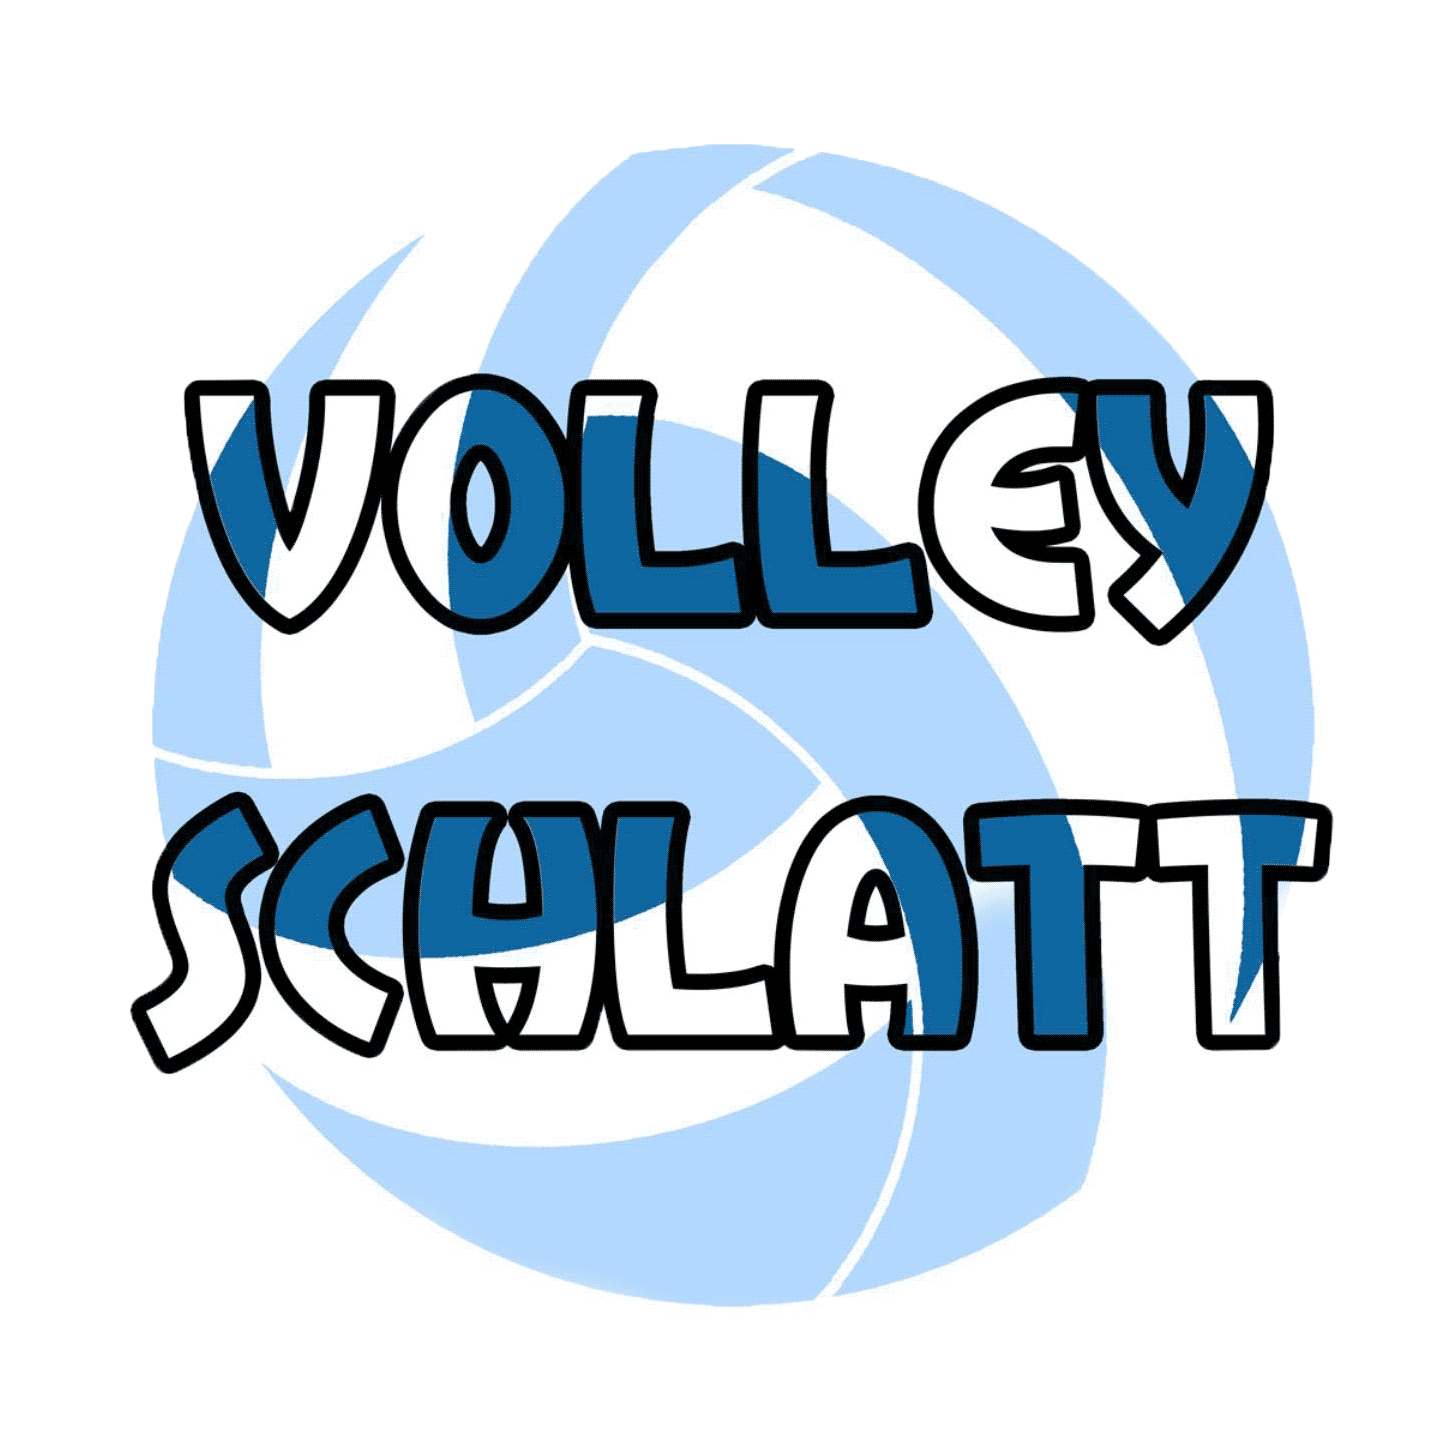 (c) Volleyschlatt.ch